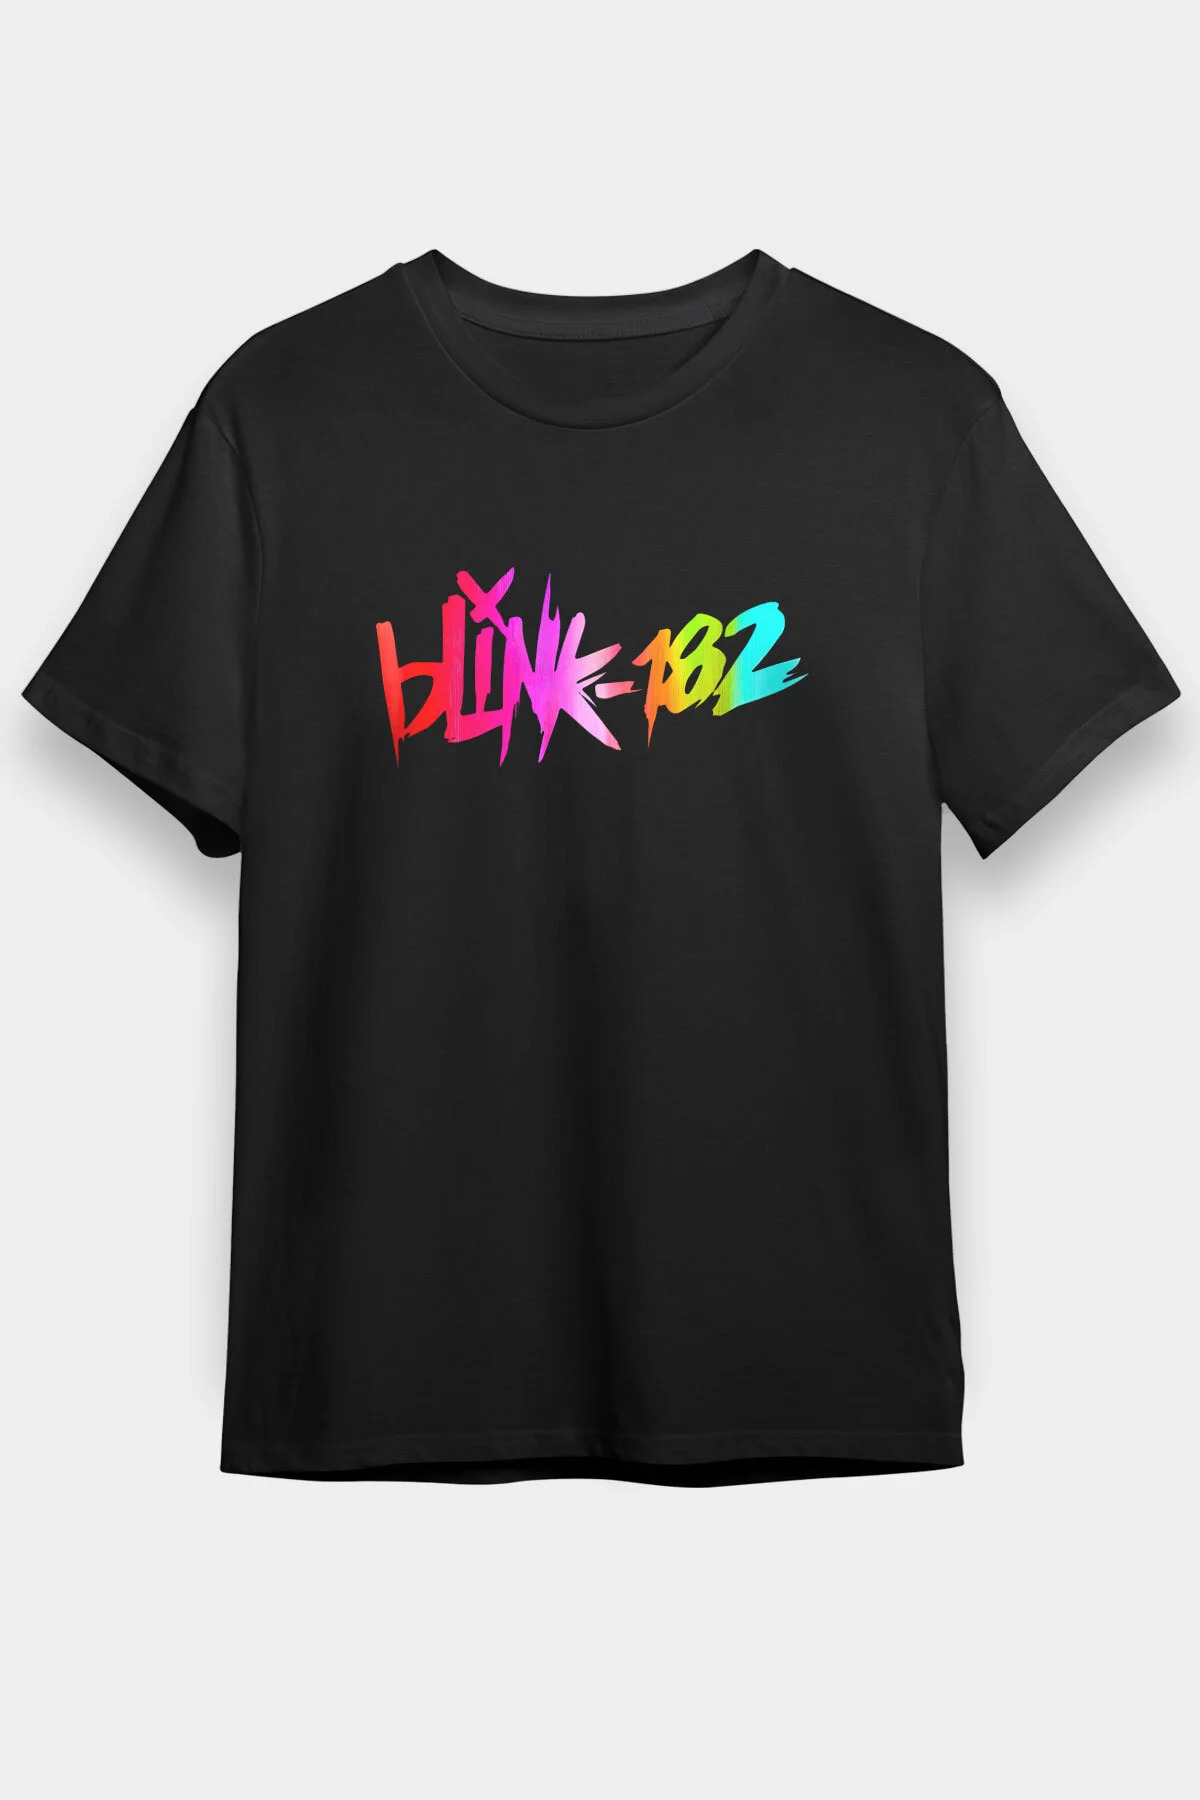 Blink 182 , Music Band ,Unisex Tshirt 22/